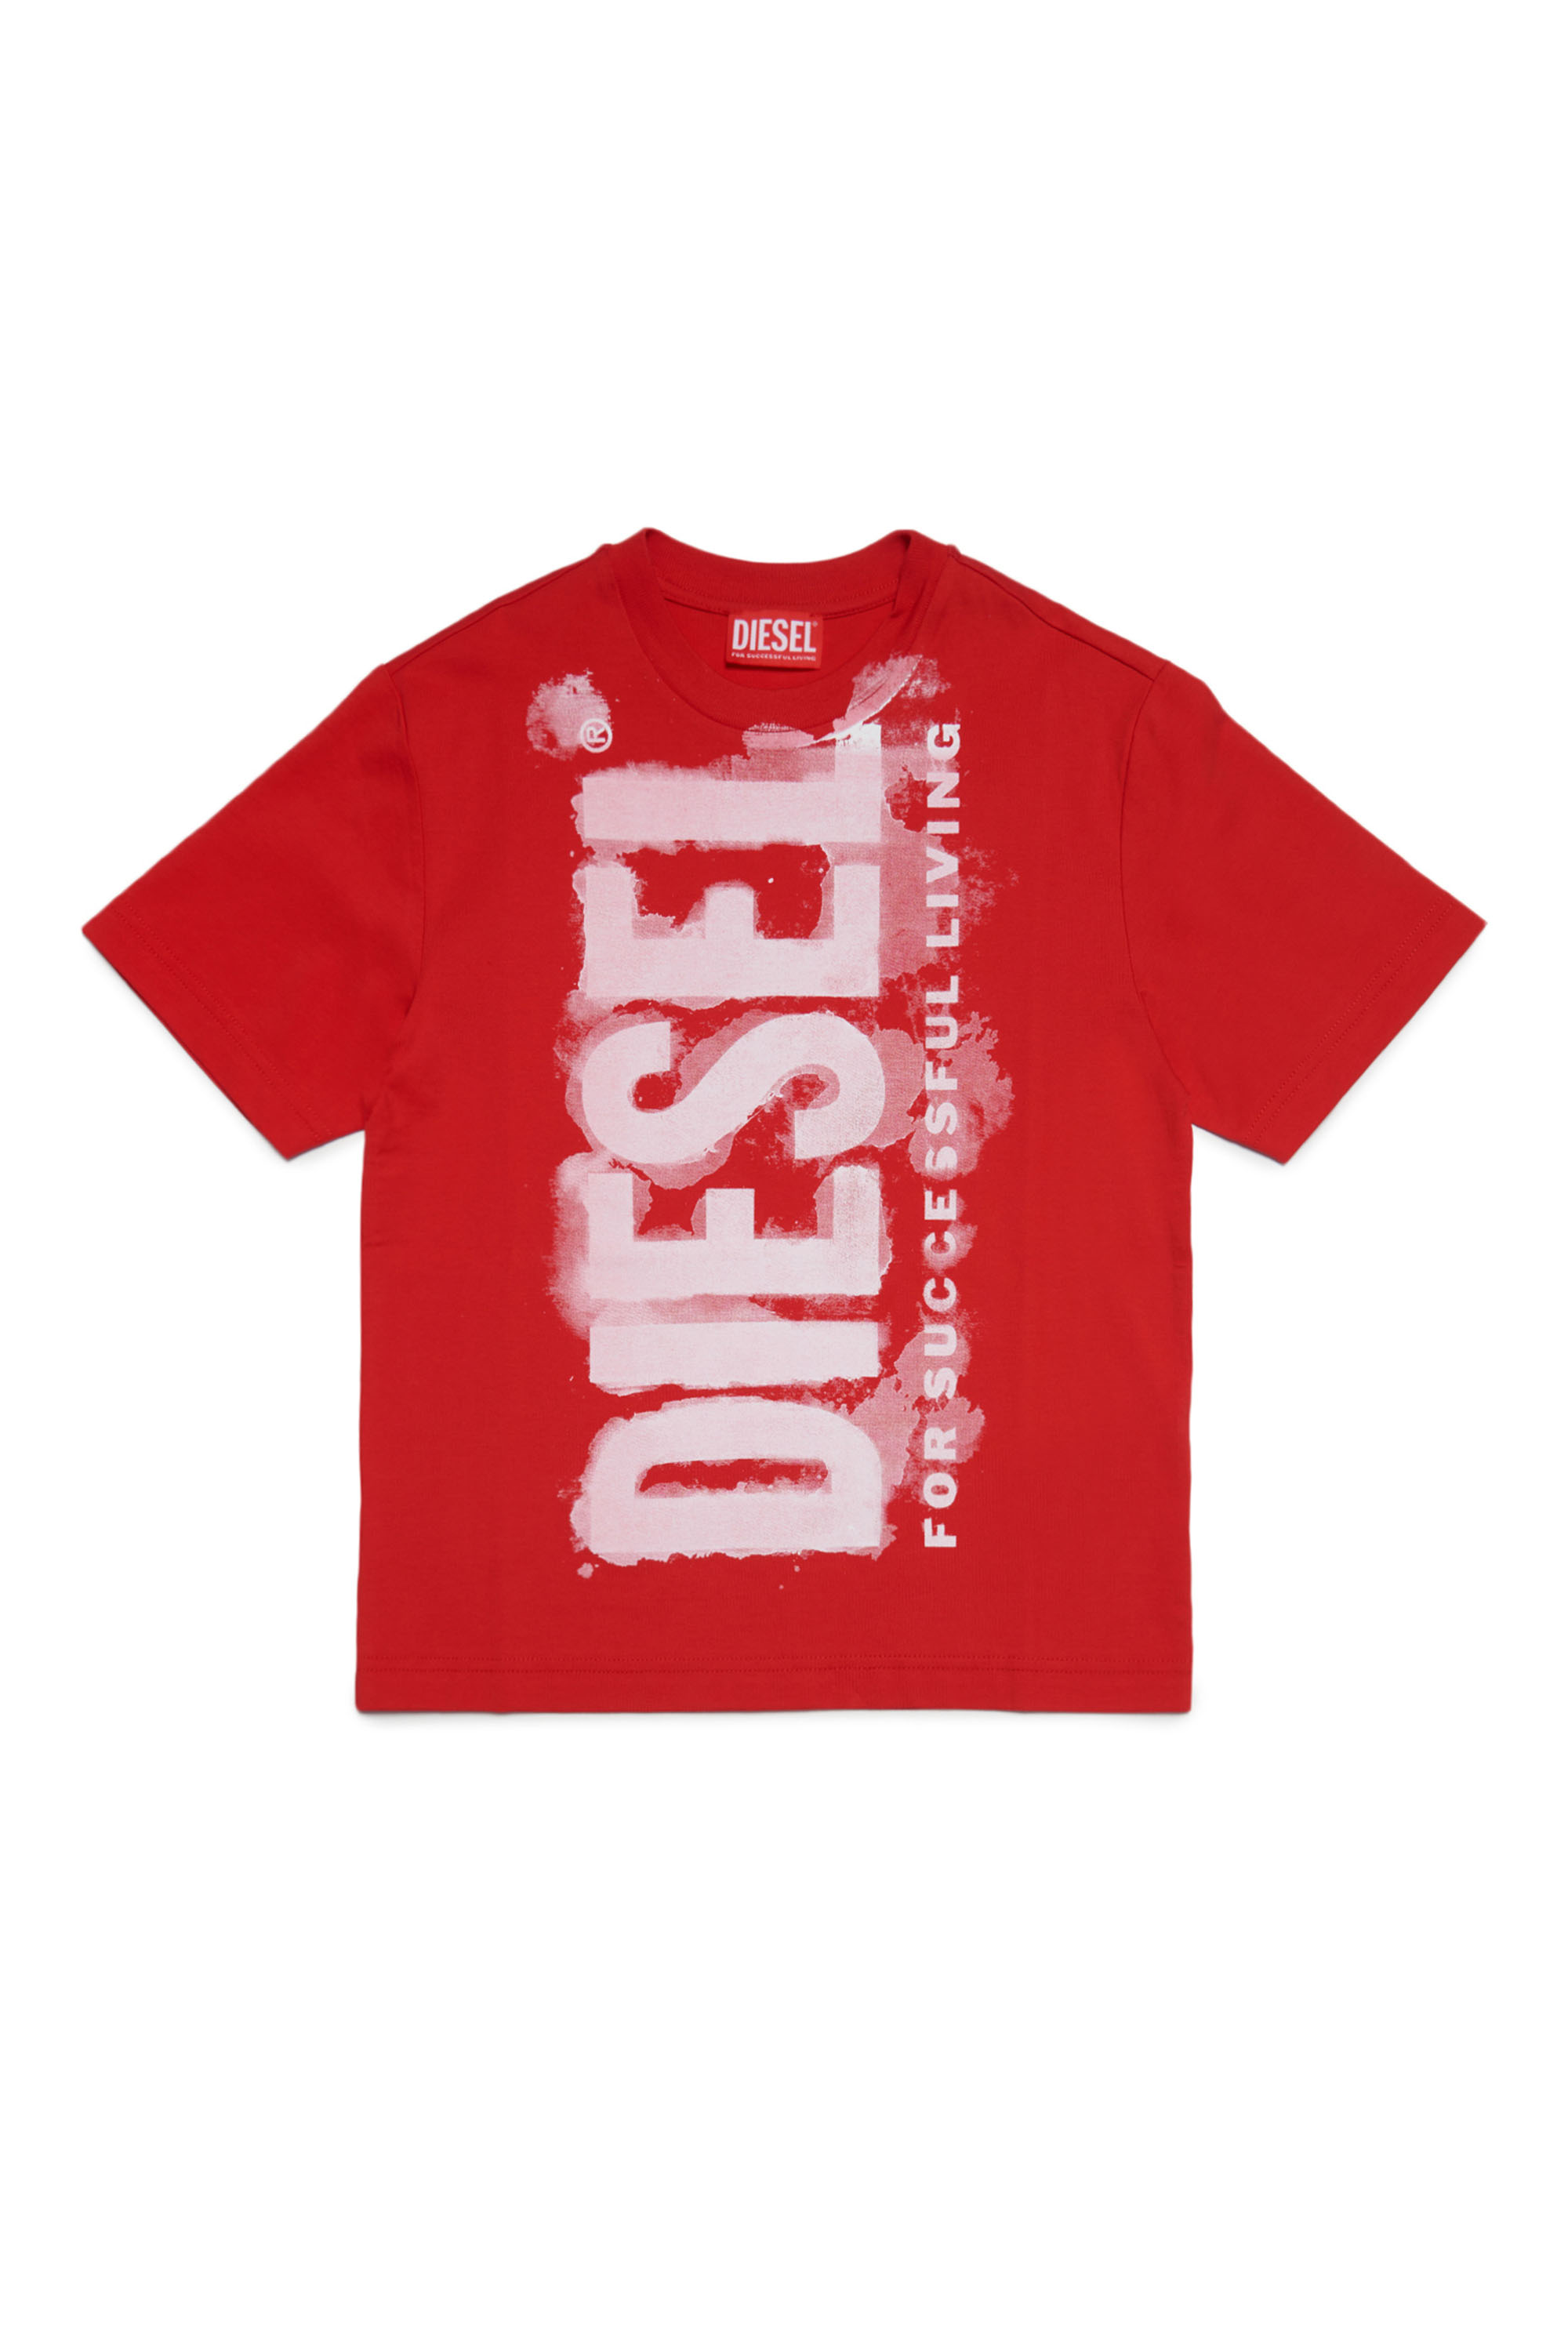 Diesel - TJUSTE16 OVER, Red - Image 1